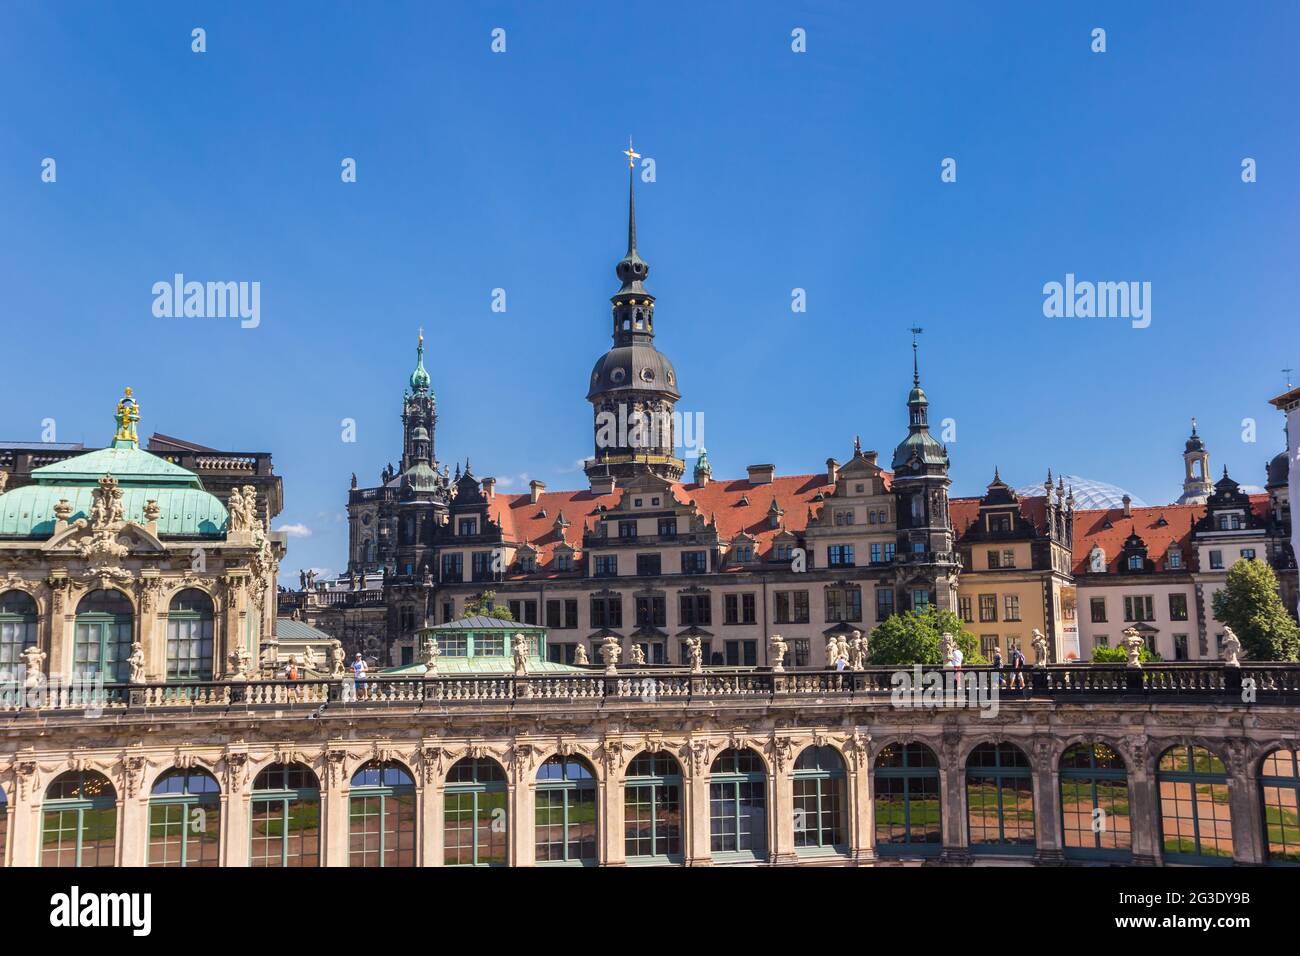 Skyline of the historic inner city of Dresden, Germany Stock Photo